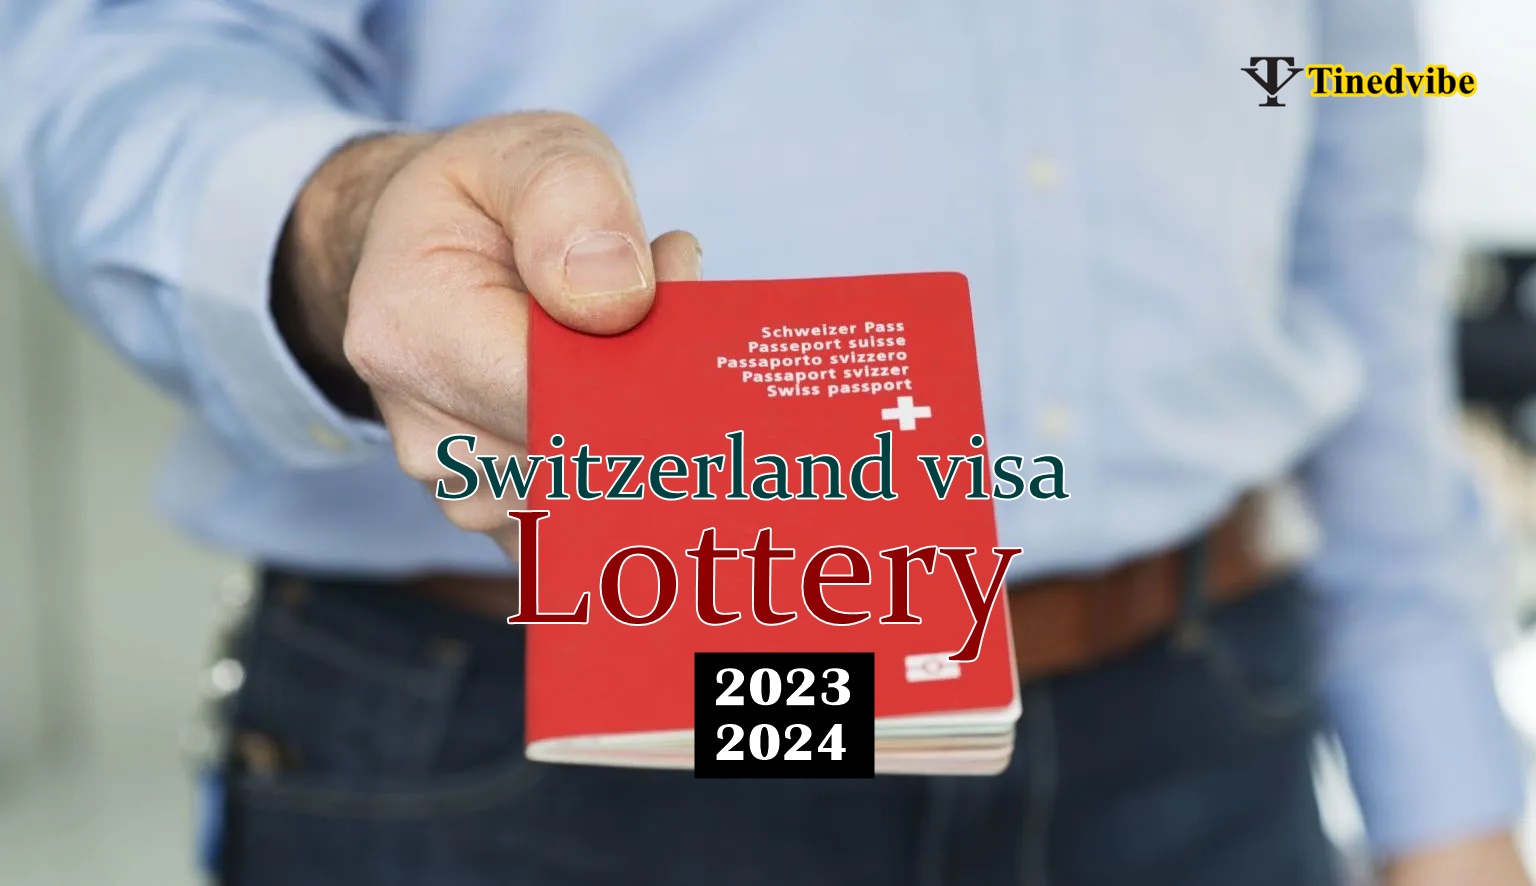 Switzerland visa Lottery 2023